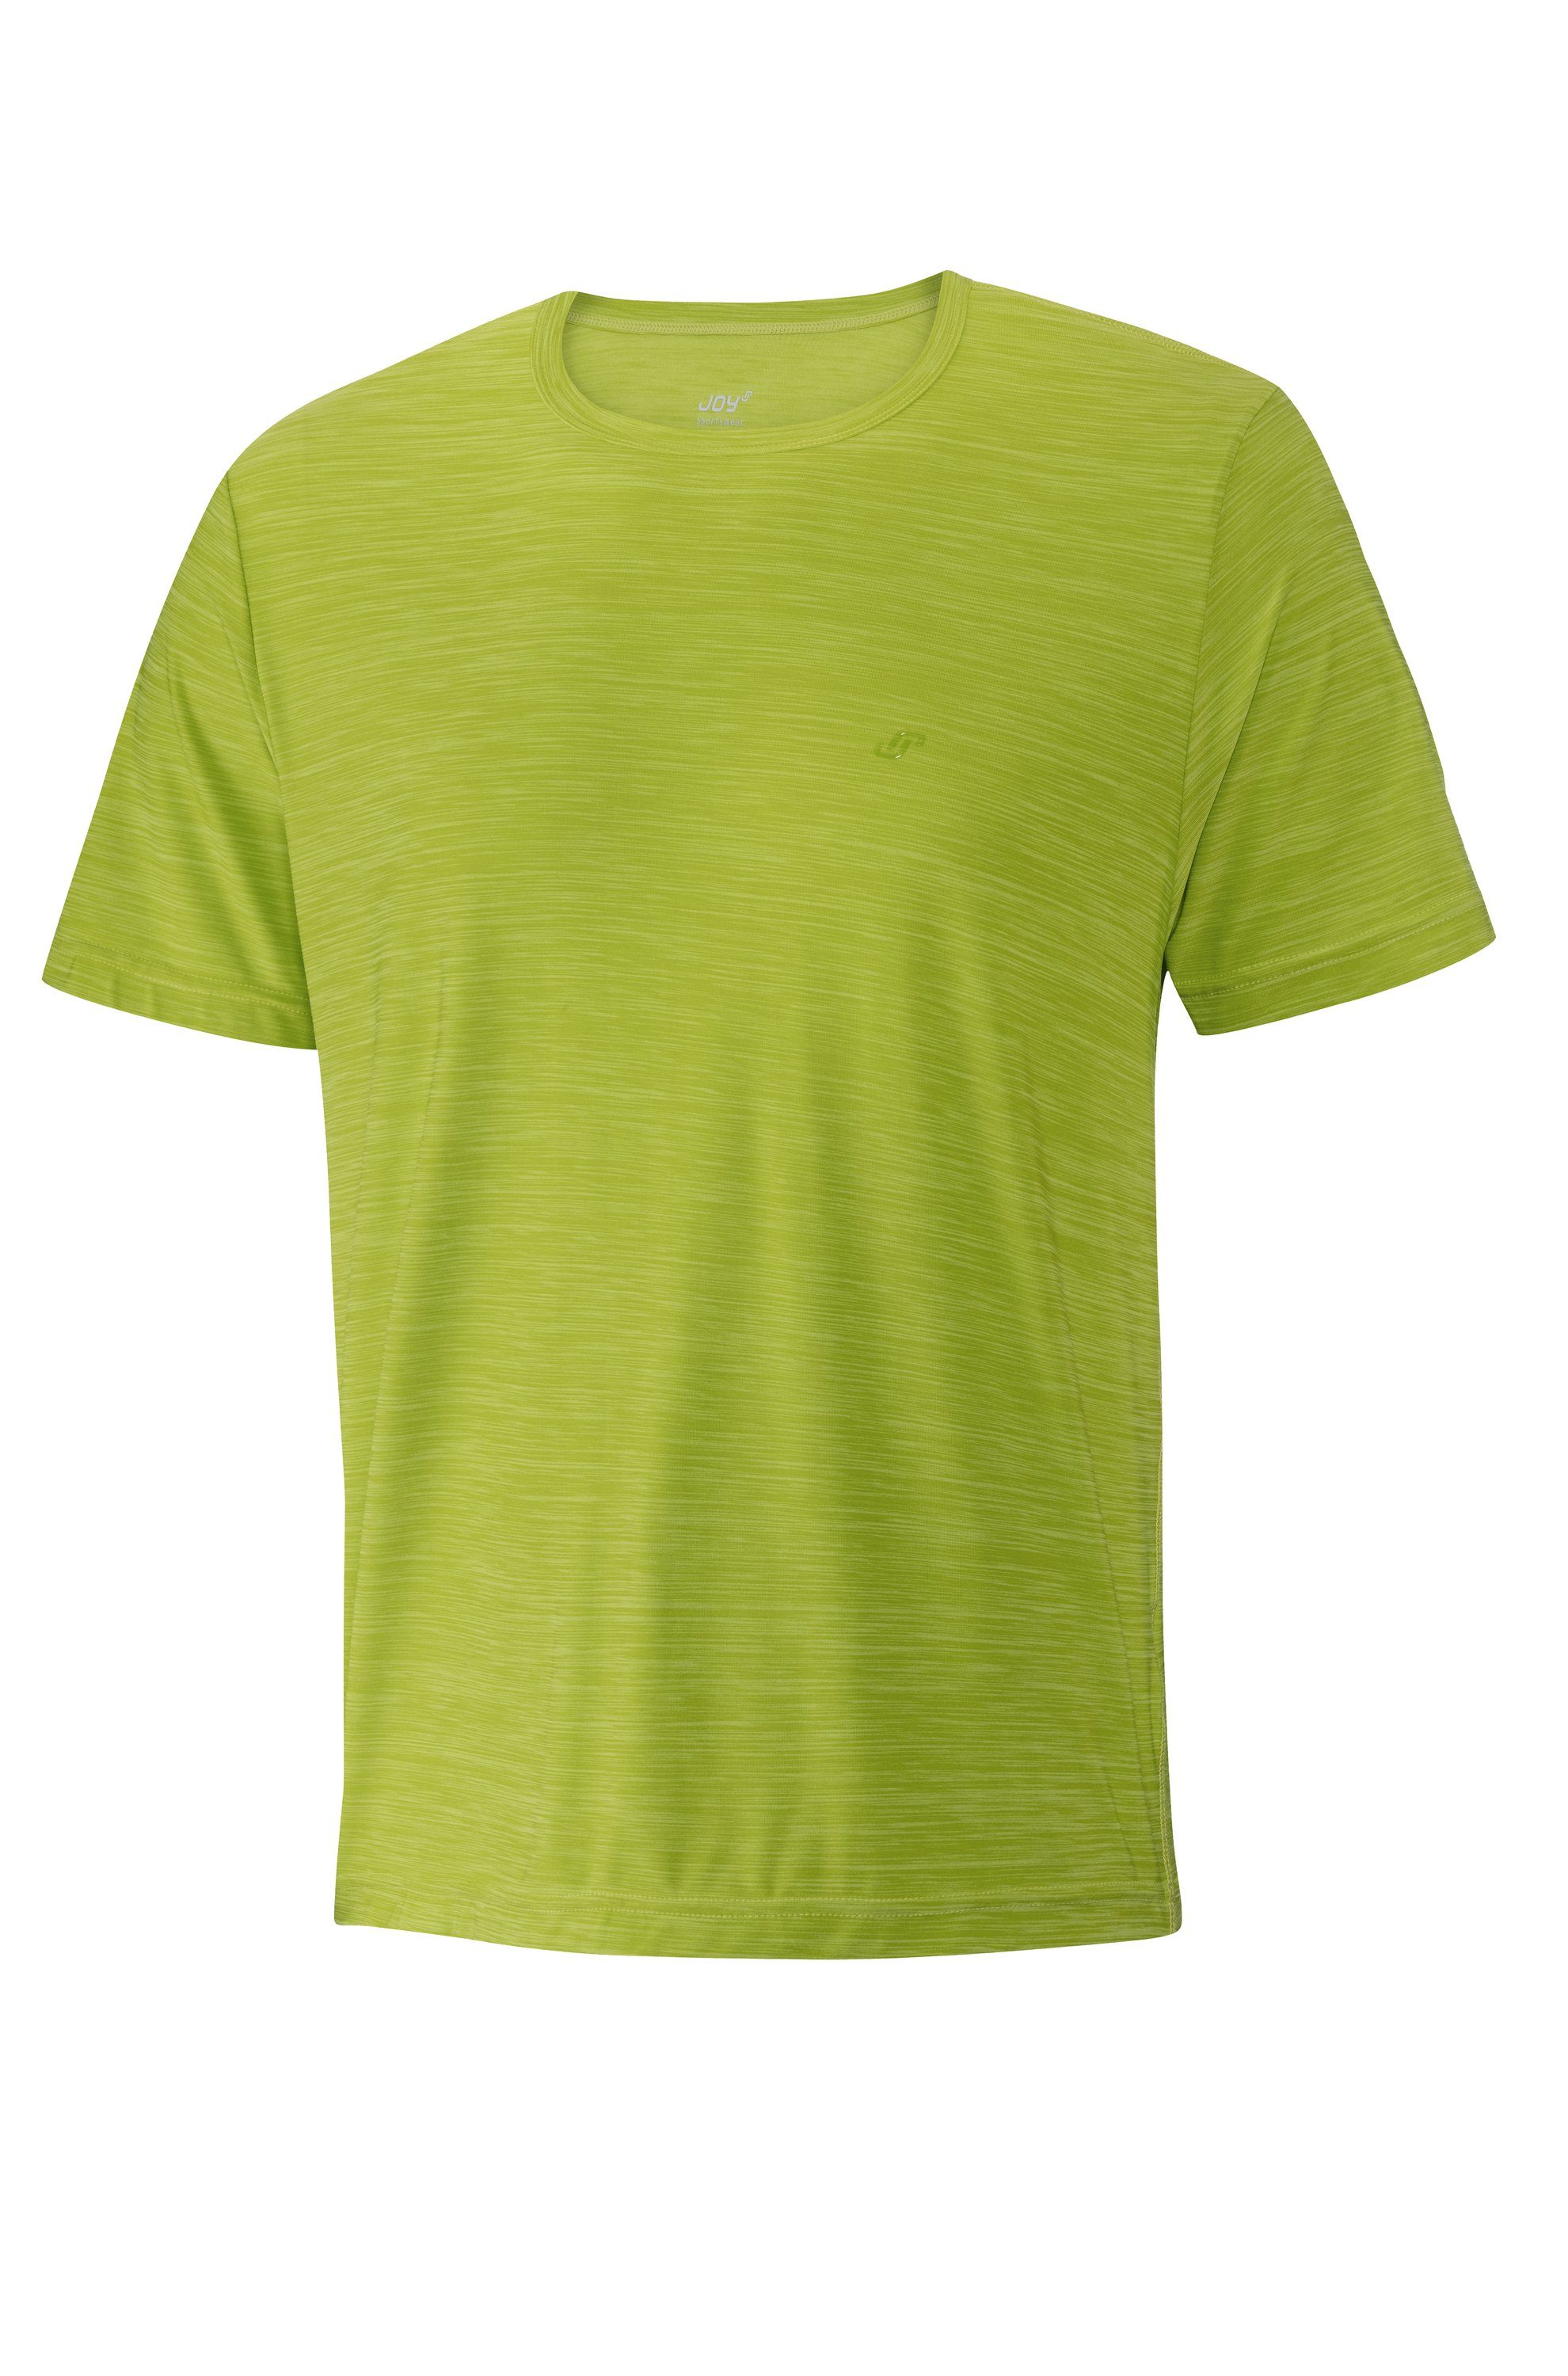 JOY & FUN VITUS acid Sportswear T-Shirt Joy melange T-Shirt lime